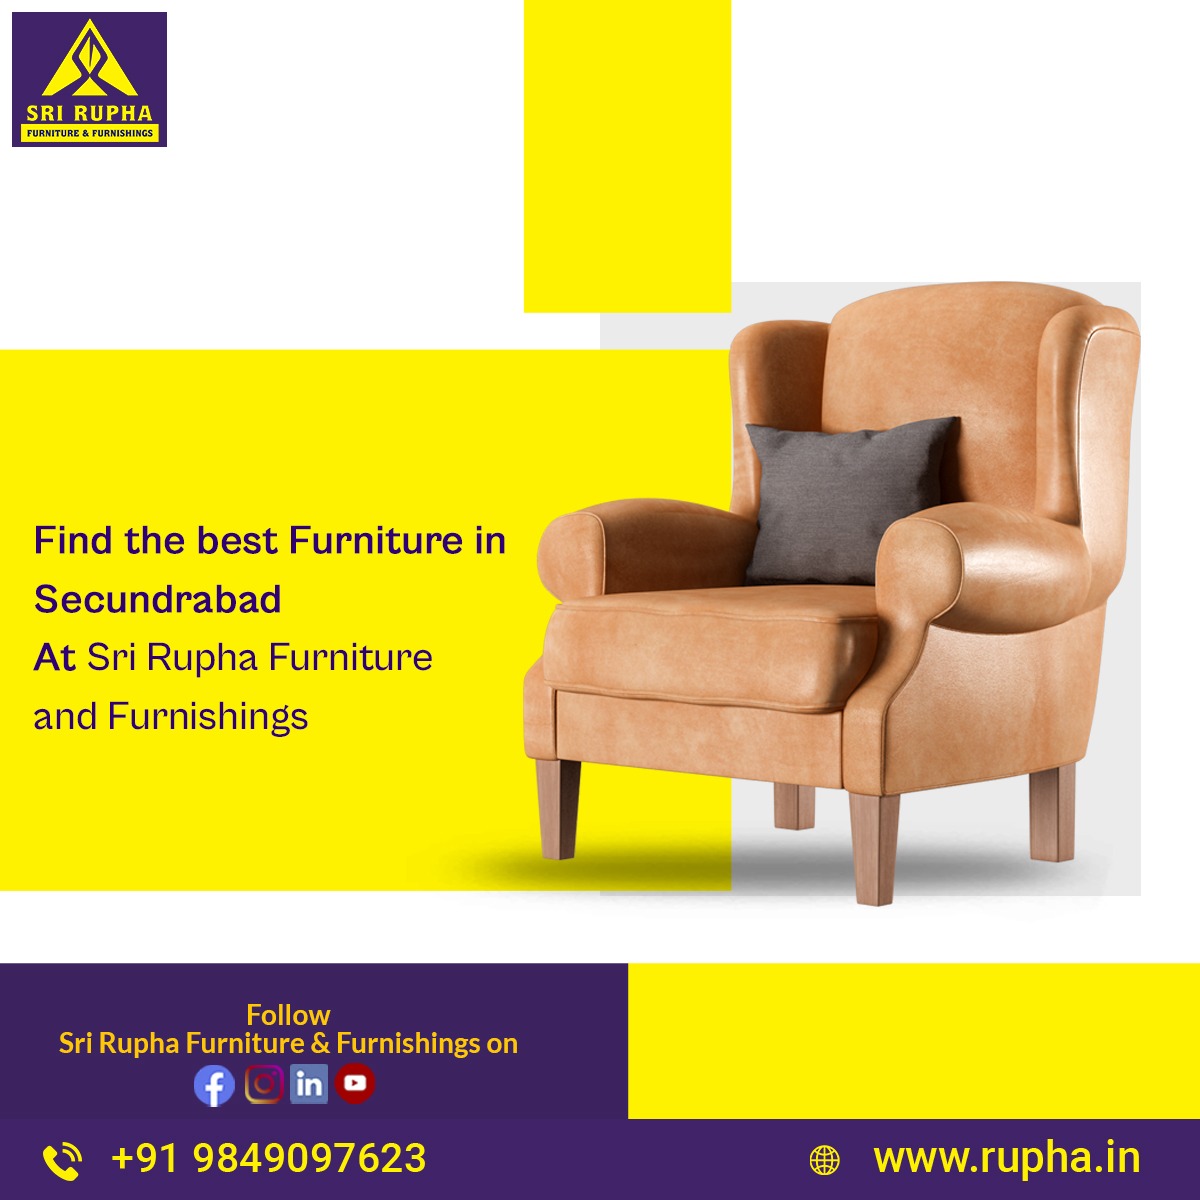 Find the best Furniture in Secundrabad At 𝗦𝗿𝗶 𝗥𝘂𝗽𝗵𝗮 𝗙𝘂𝗿𝗻𝗶𝘁𝘂𝗿𝗲 𝗮𝗻𝗱 𝗙𝘂𝗿𝗻𝗶𝘀𝗵𝗶𝗻𝗴𝘀

𝘽𝙞𝙜 𝙤𝙛𝙛𝙚𝙧𝙨 𝙛𝙤𝙧 𝙮𝙤𝙪 𝙜𝙚𝙩!! 𝐆𝐞𝐭 𝐡𝐮𝐠𝐞 𝐛𝐞𝐧𝐞𝐟𝐢𝐭𝐬.
Call Now: 9849097623
#ruphafurniture #rupha #furniture #furnituredesign #furnituremaker